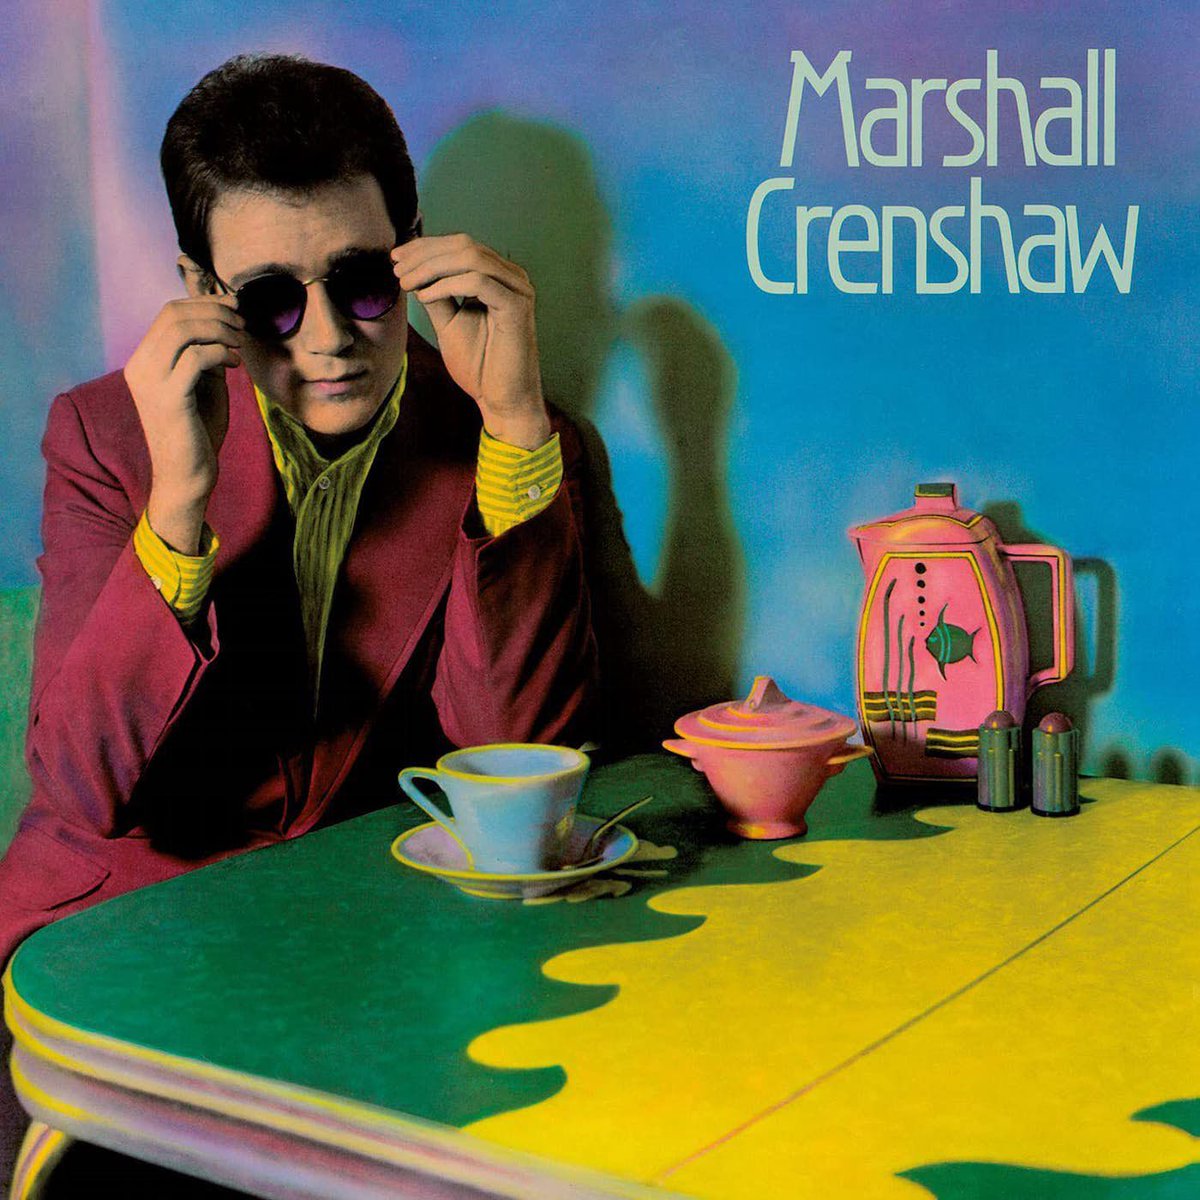 #1000AlbumsToImproveYourLife
“Marshall Crenshaw” (1982)
#MarshallCrenshaw